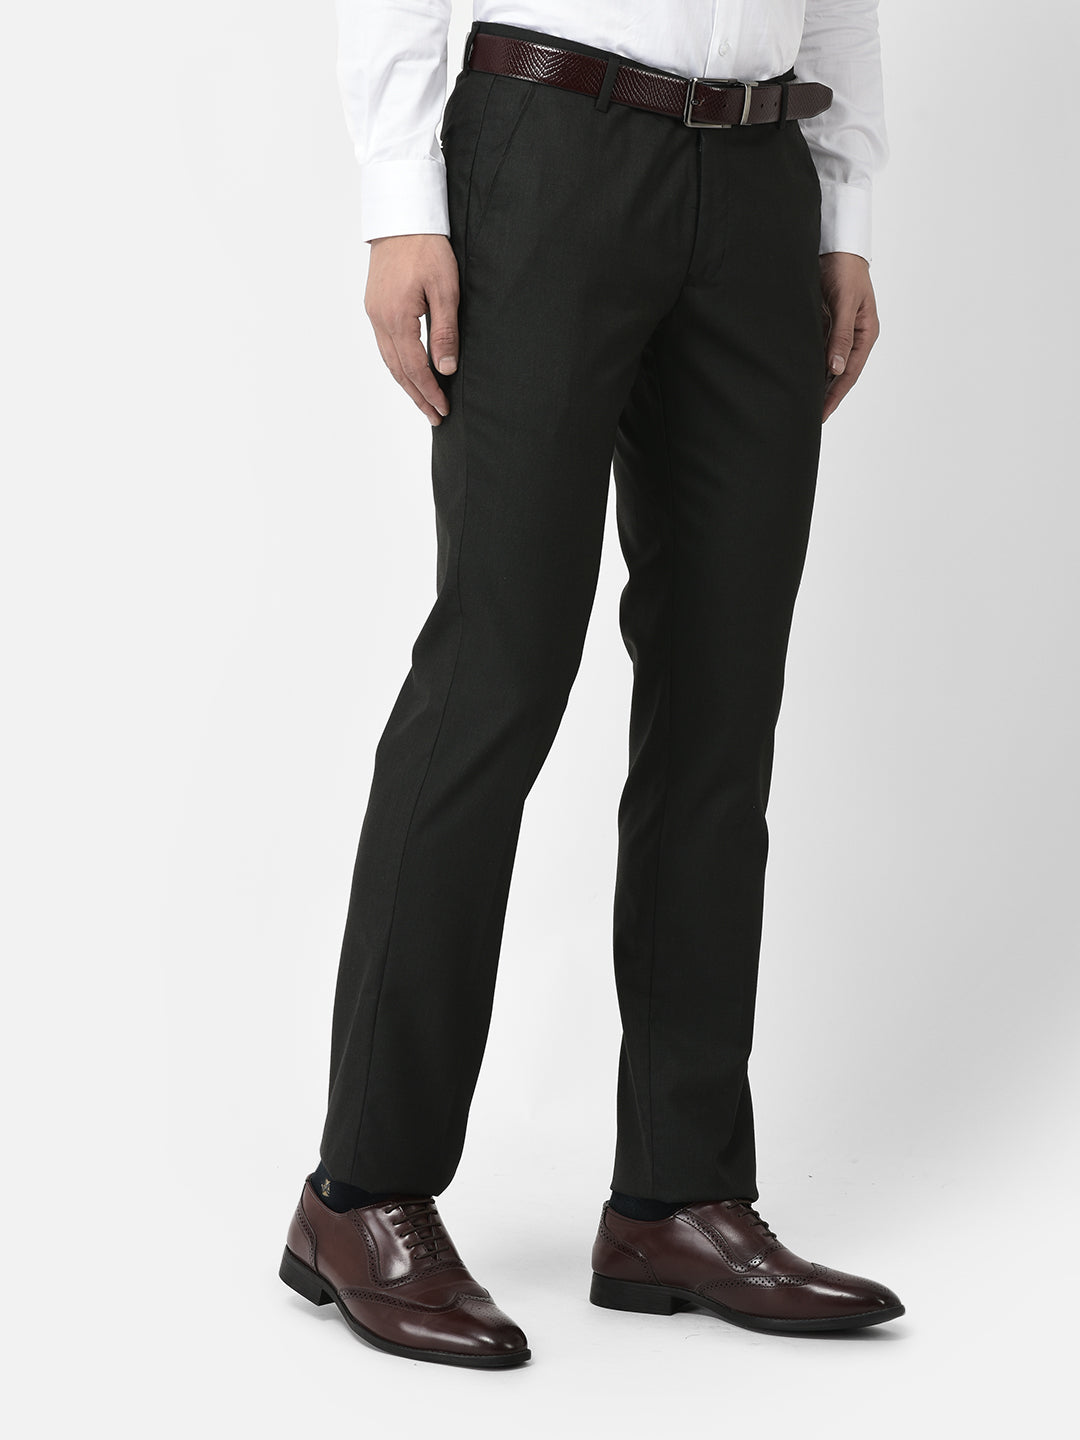 Pesado Lnt Grey and Black Formal Trouser For Mens